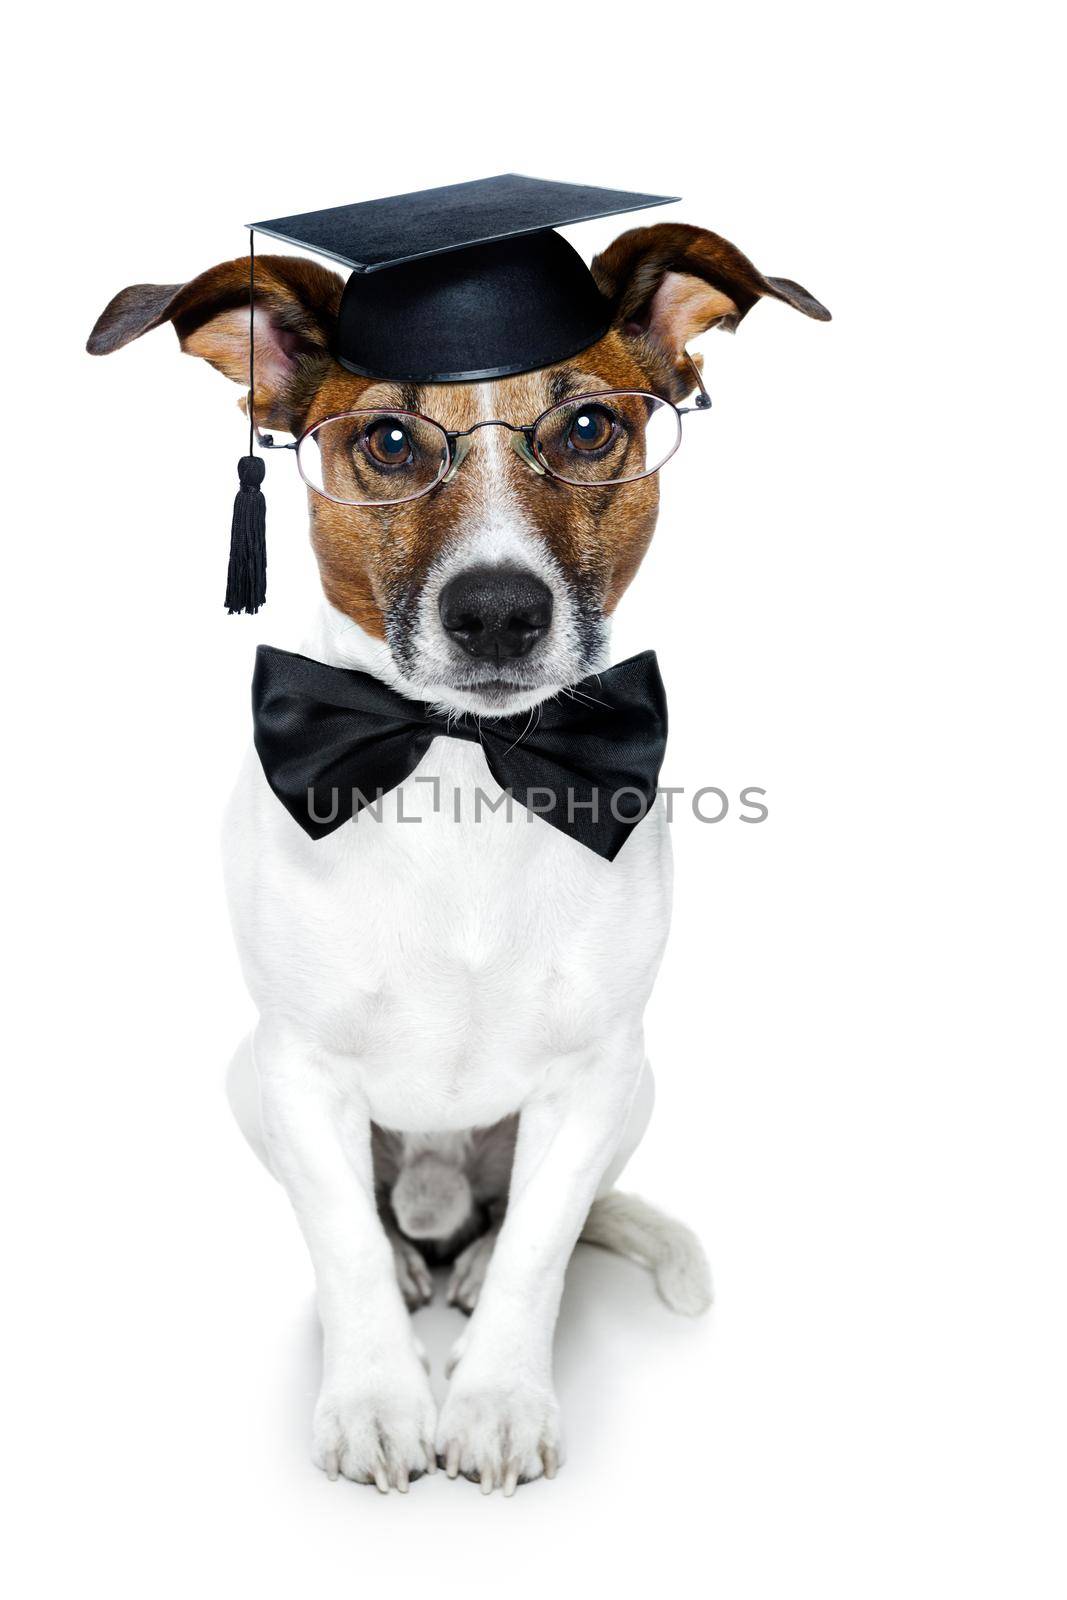 graduated dog by Brosch